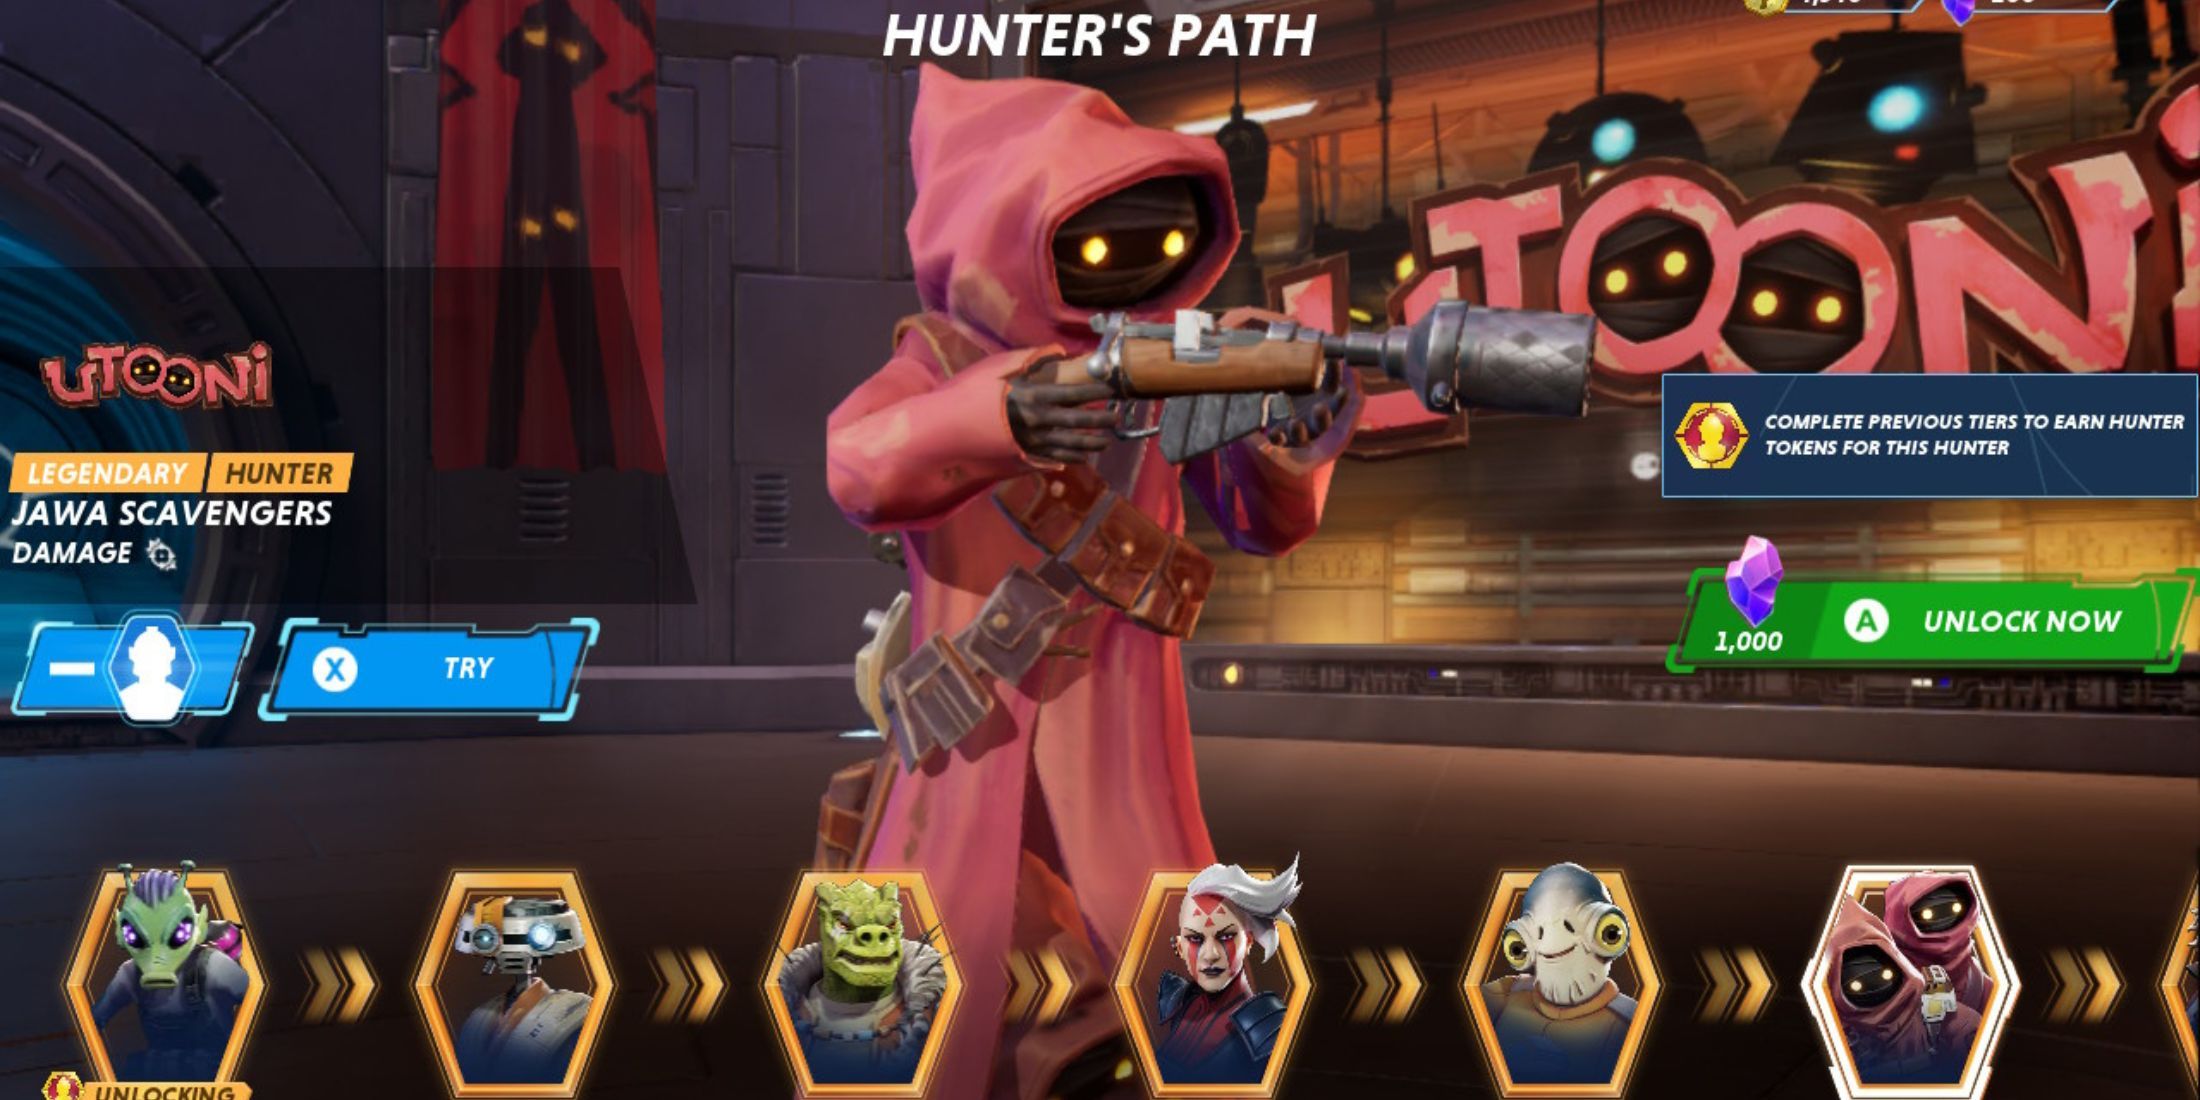 Utooni from Star Wars: Hunters in the Hunter's Path menu